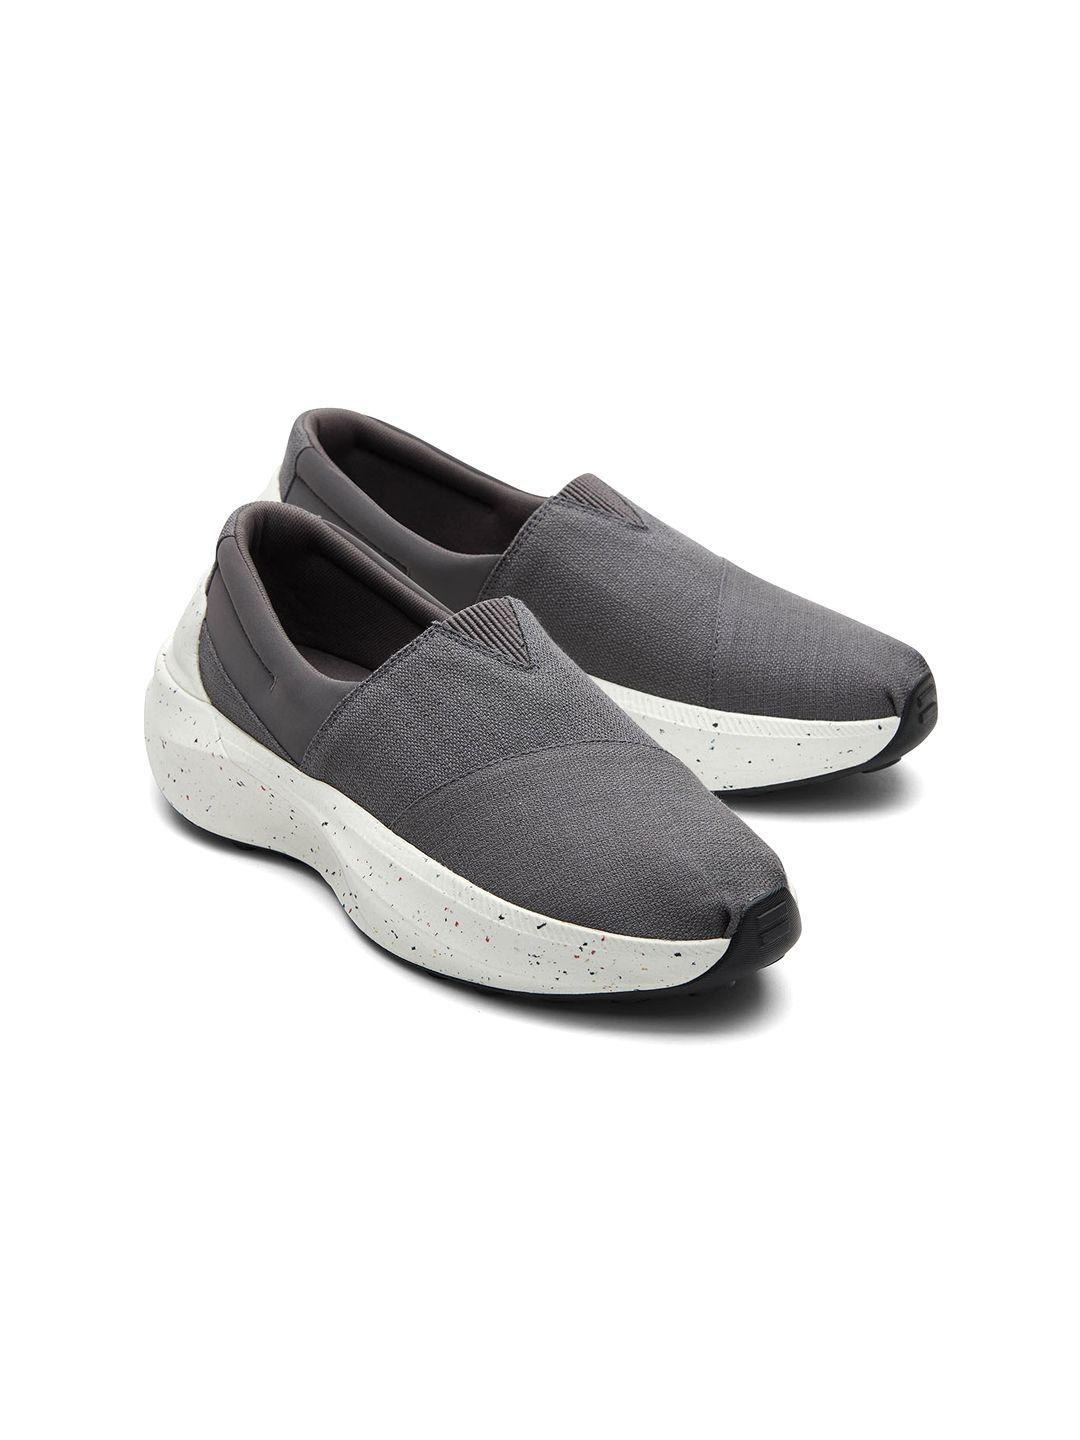 toms women charcoal grey contrast sole slip-on sneakers